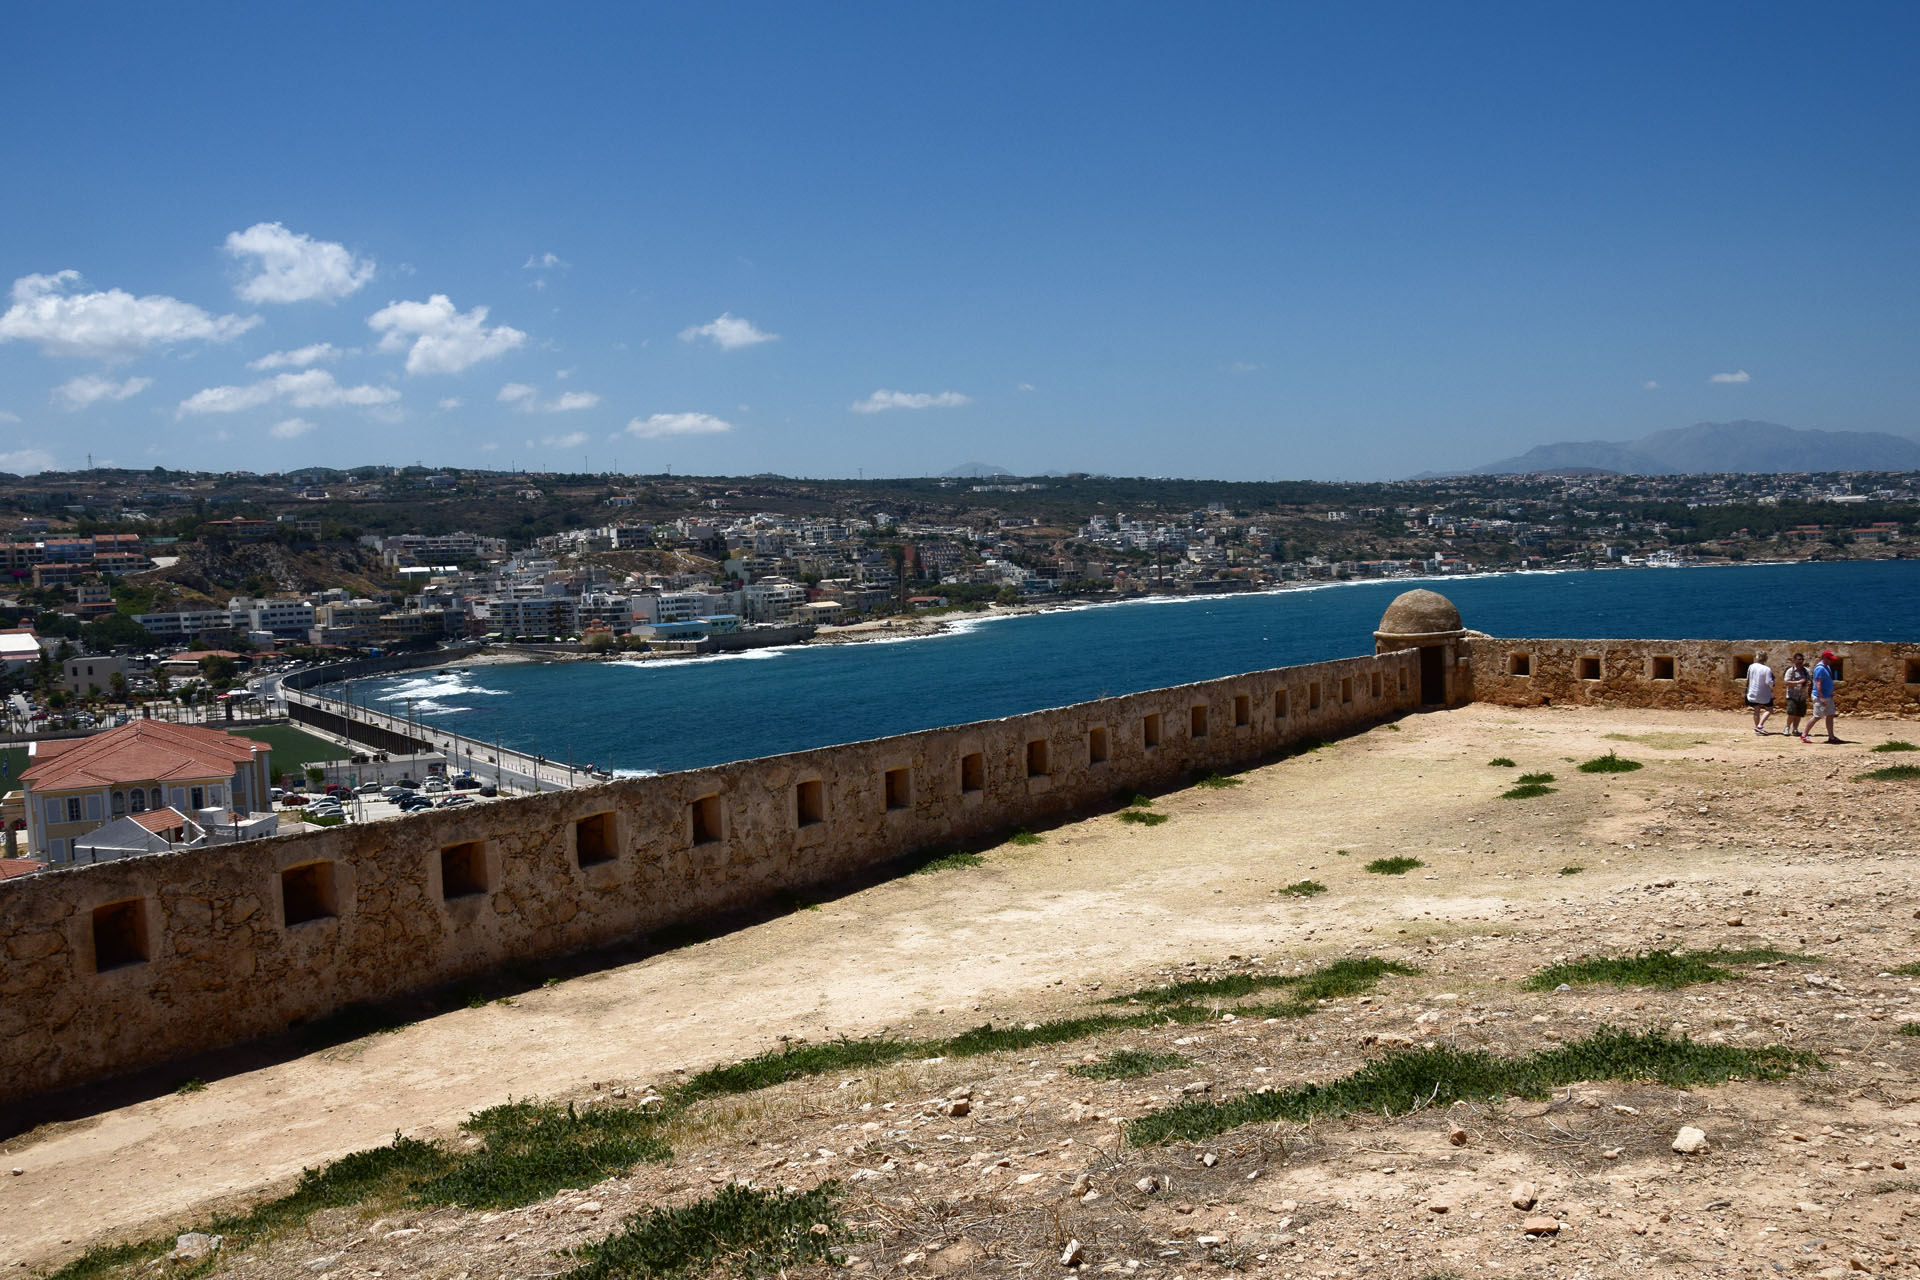 Rethymno - forteca